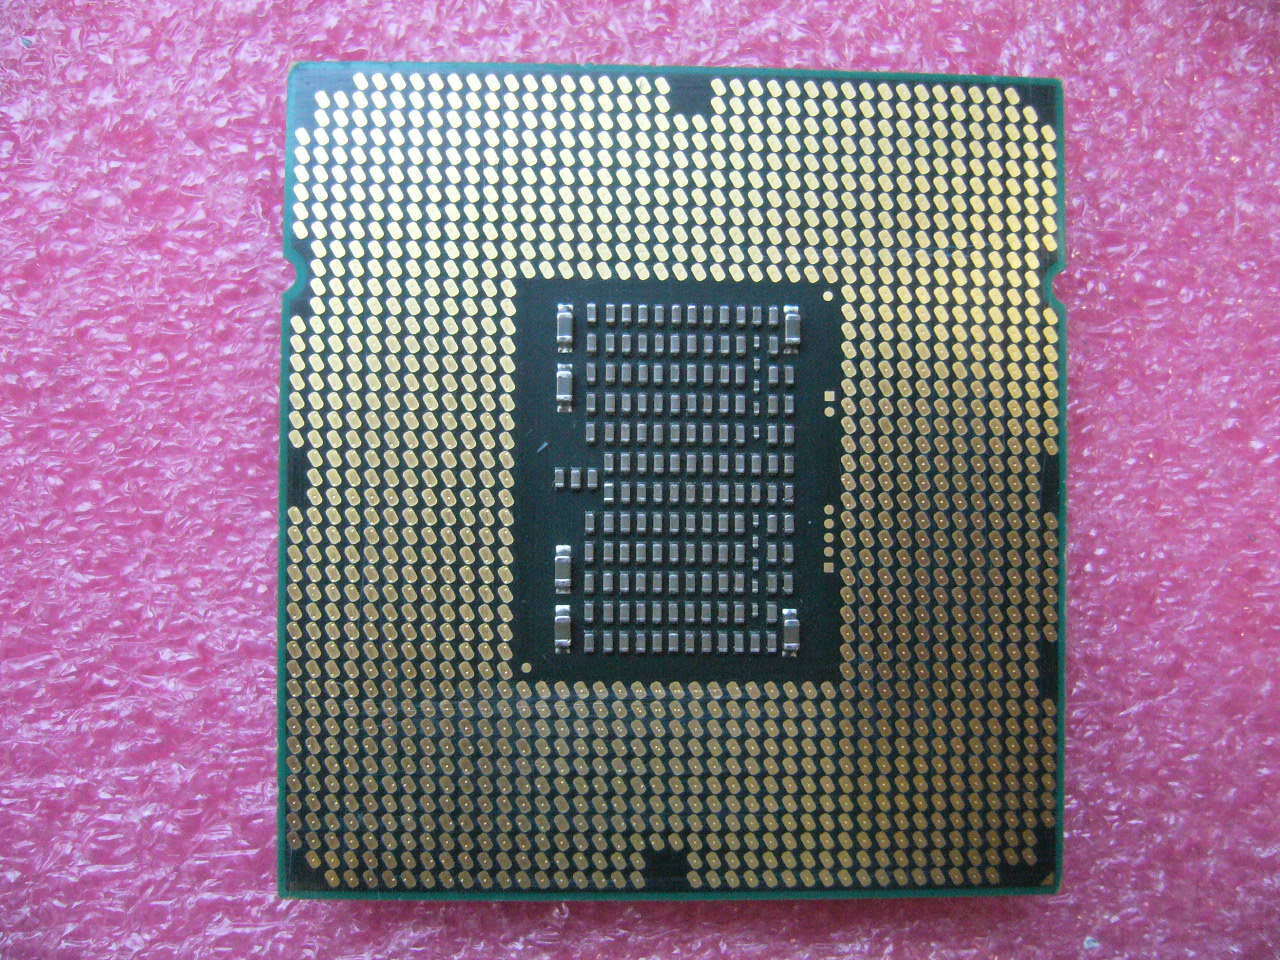 QTY 1x INTEL Quad-Cores Xeon CPU X5667 3.06GHZ/12MB LGA1366 SLBVA - Click Image to Close